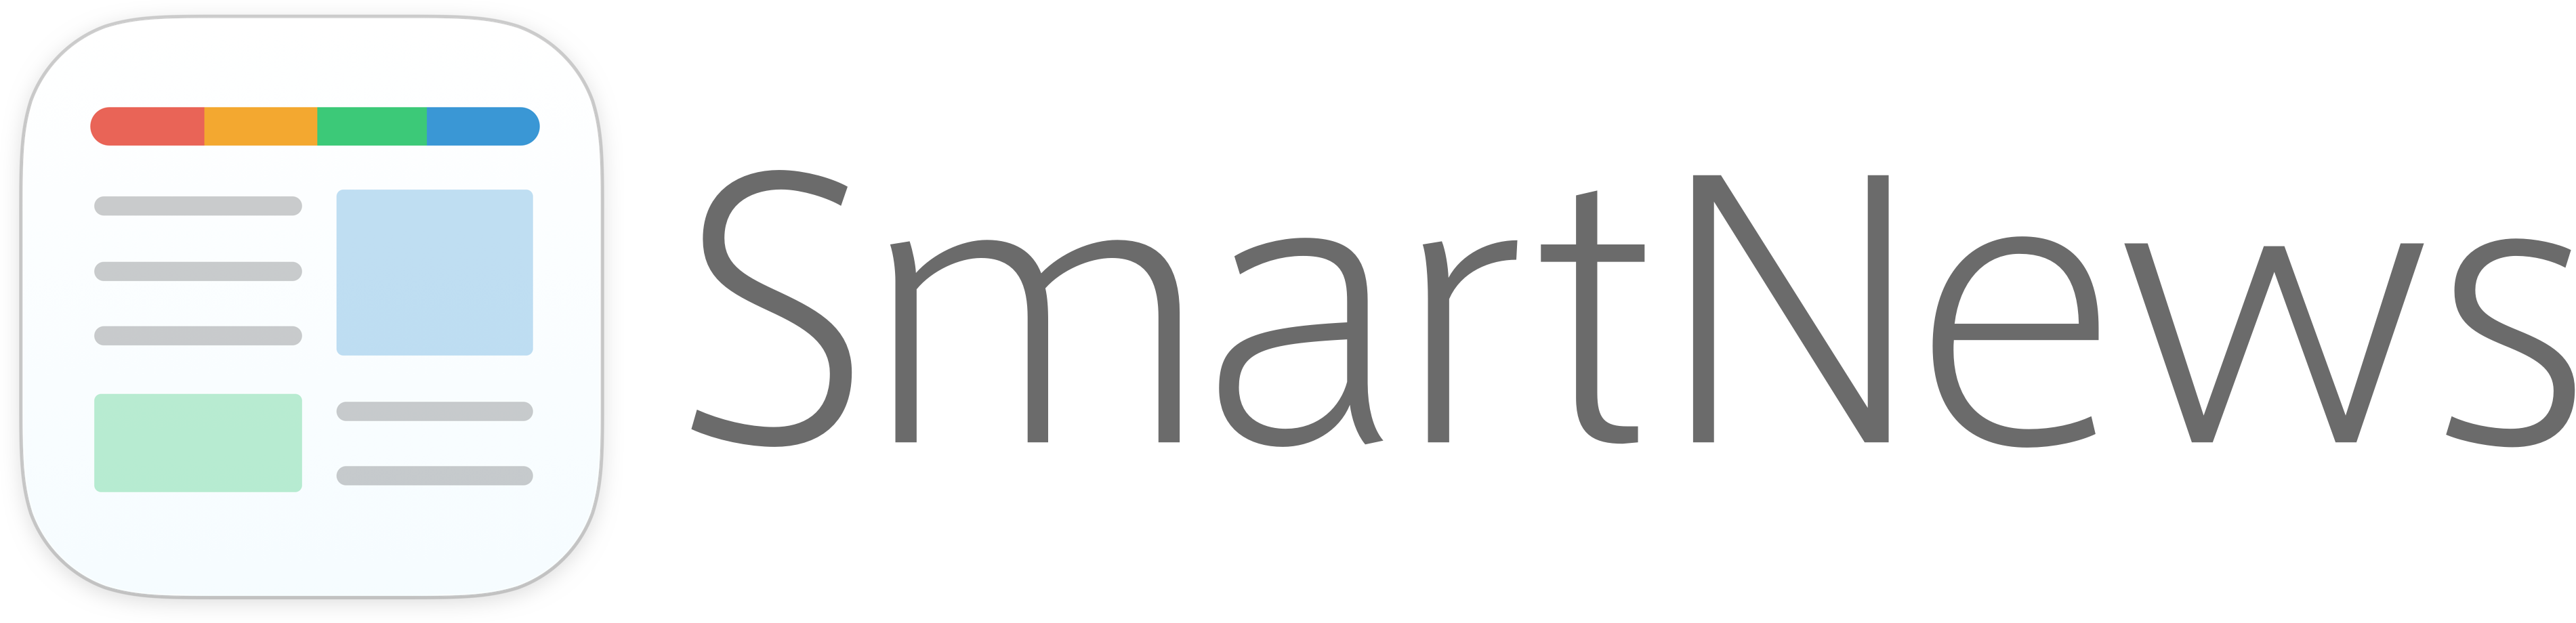 SmartNews logo